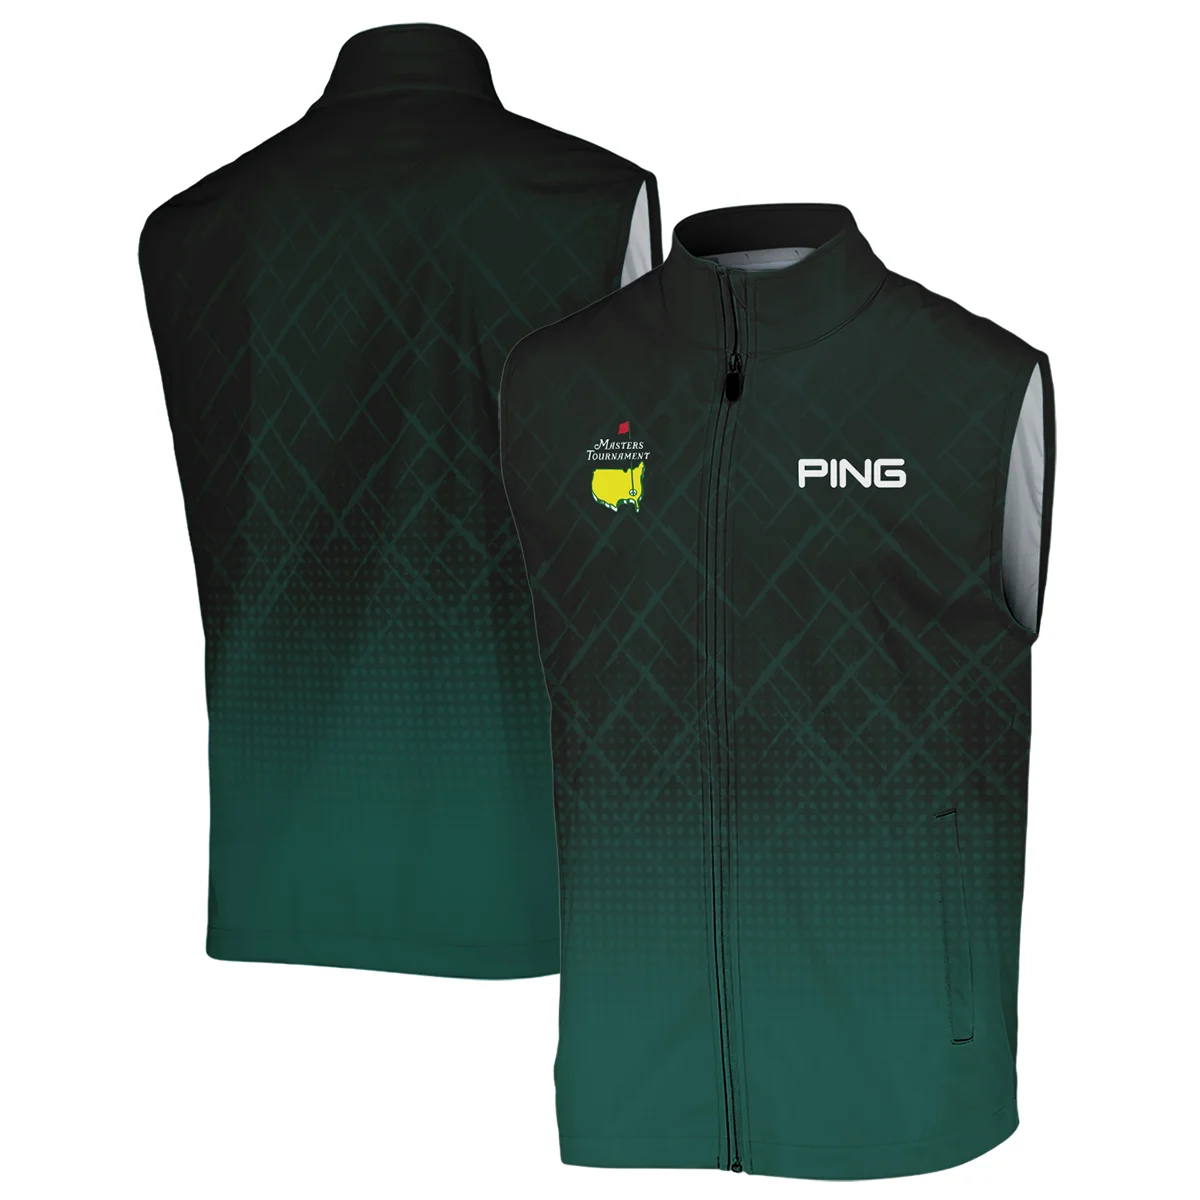 Ping Masters Tournament Sport Jersey Pattern Dark Green Sleeveless Jacket Style Classic Sleeveless Jacket